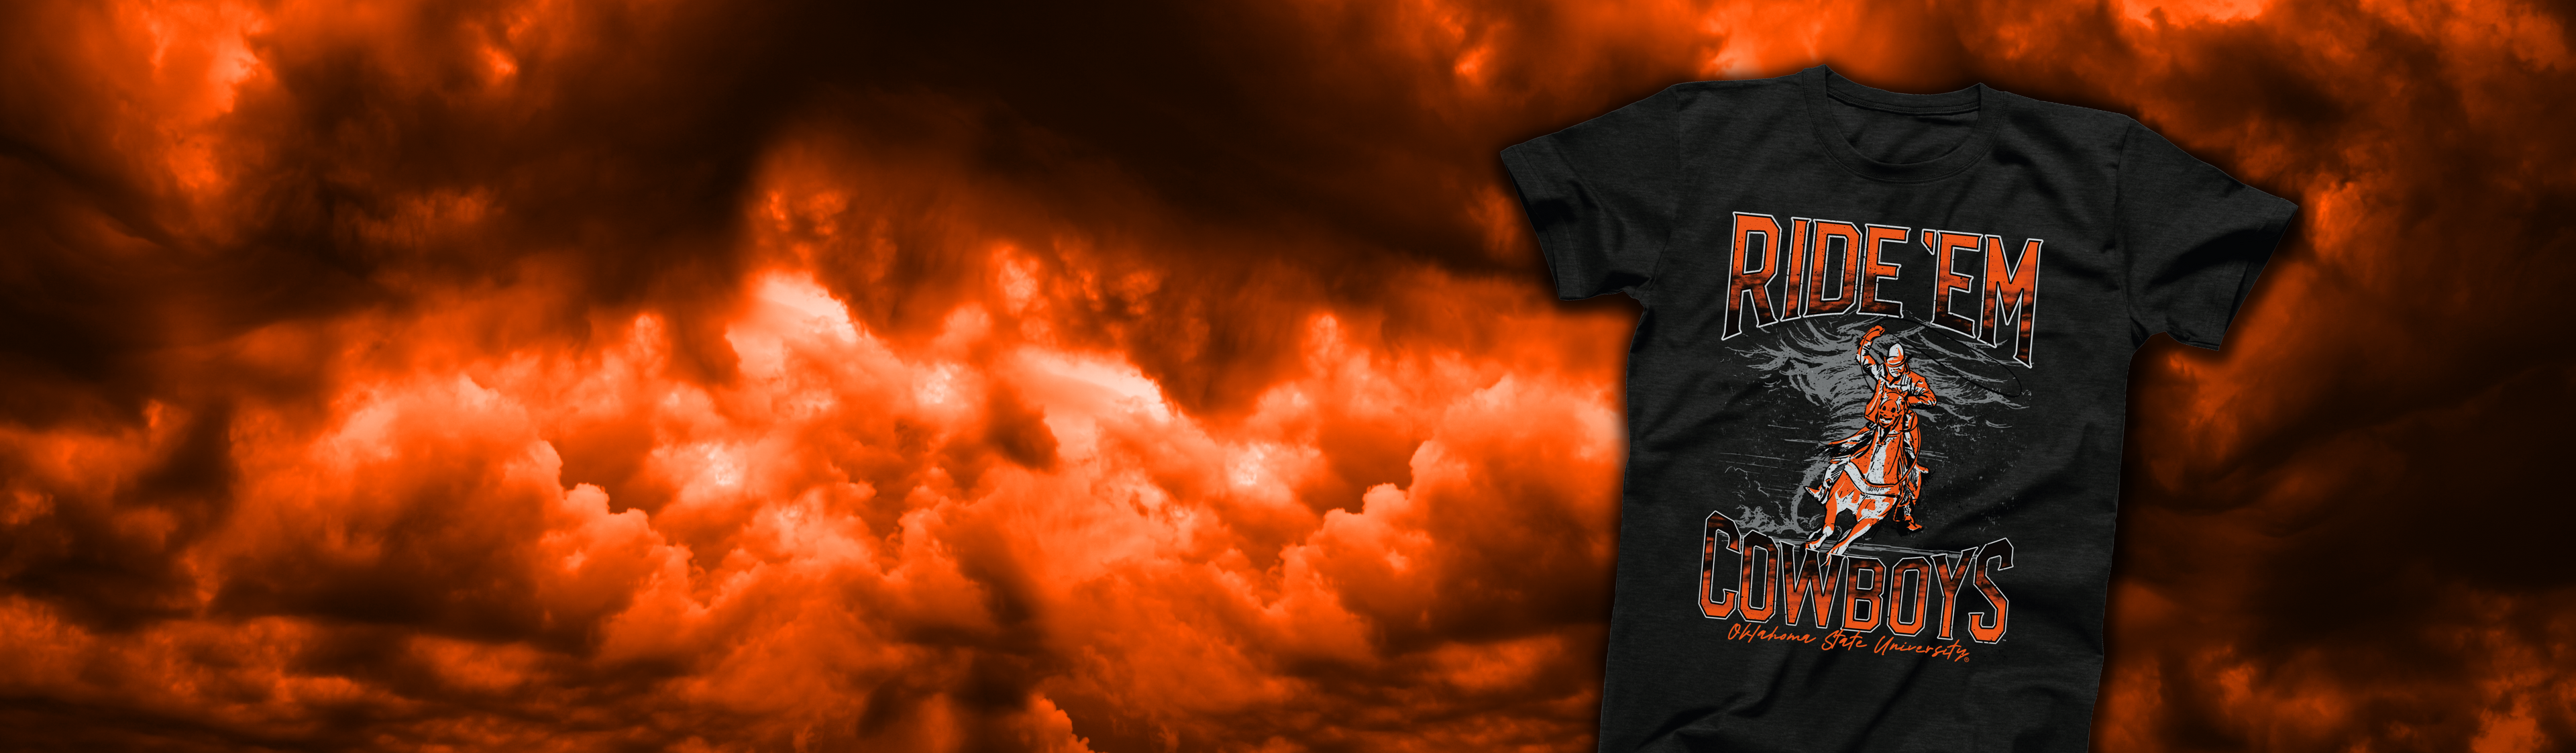 Kalksten dyd sprede Oklahoma Shirt Company » Custom Screen Printing and T-Shirts in OKC